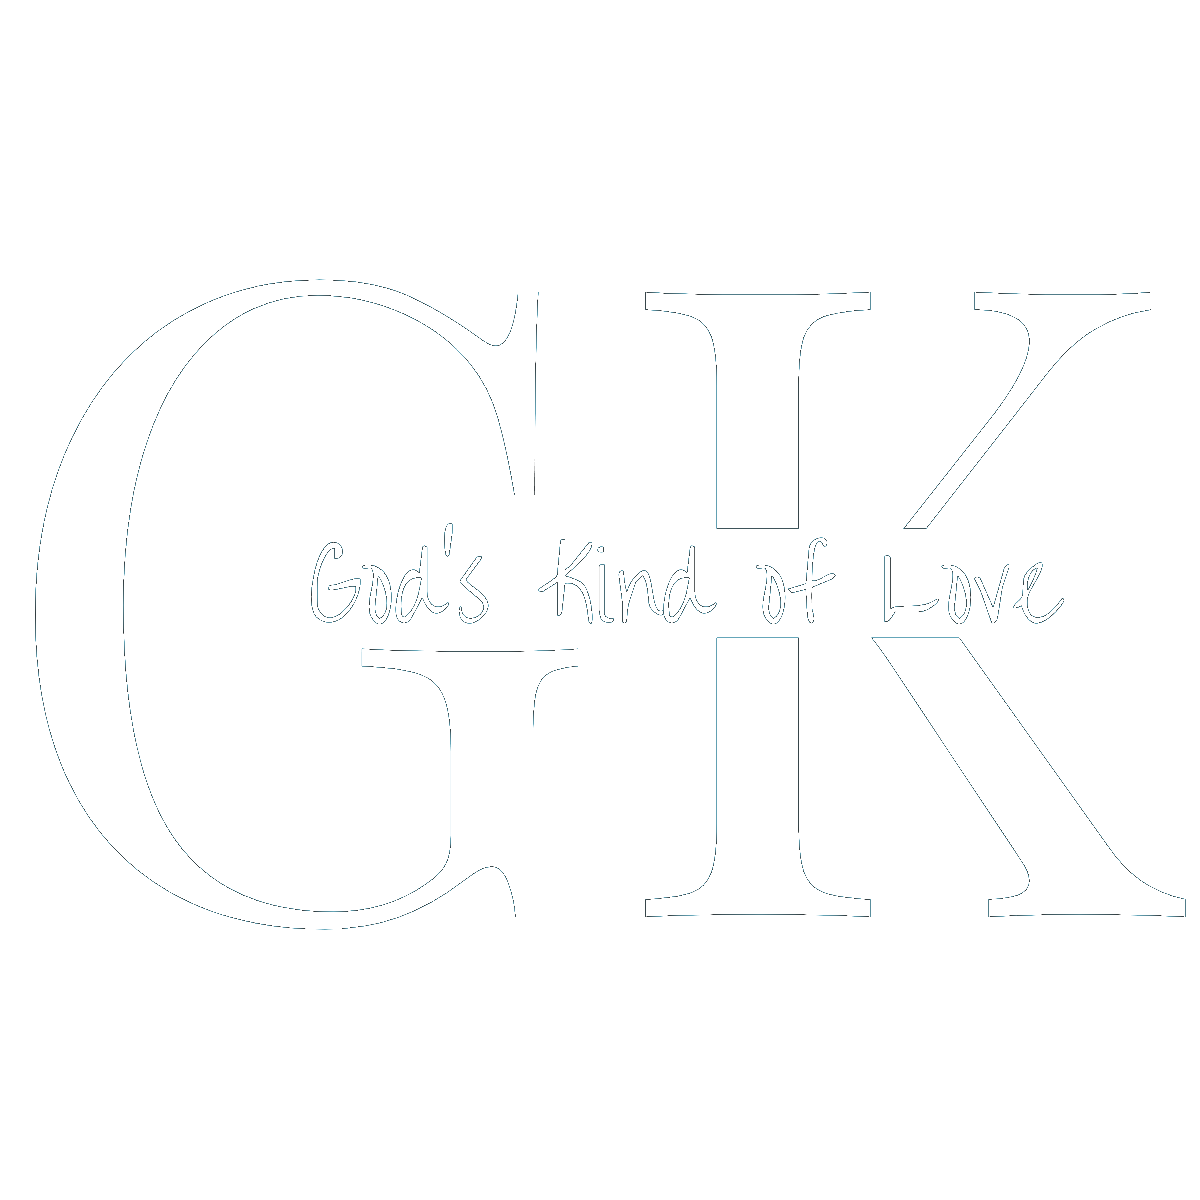 God's Kind of Love